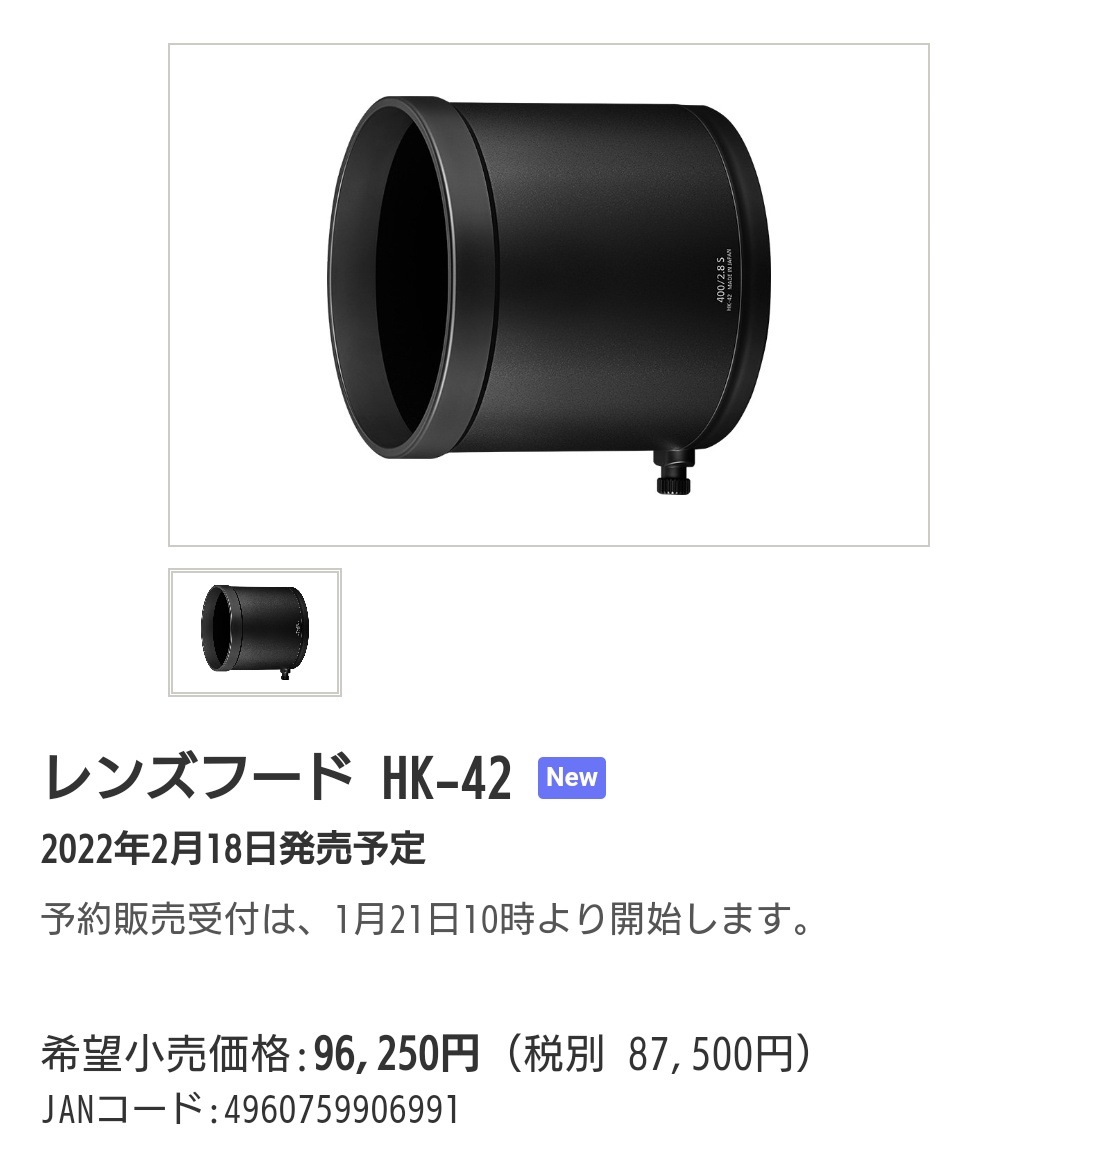 Nikon レンズフード HK-42 - adhuganda.com